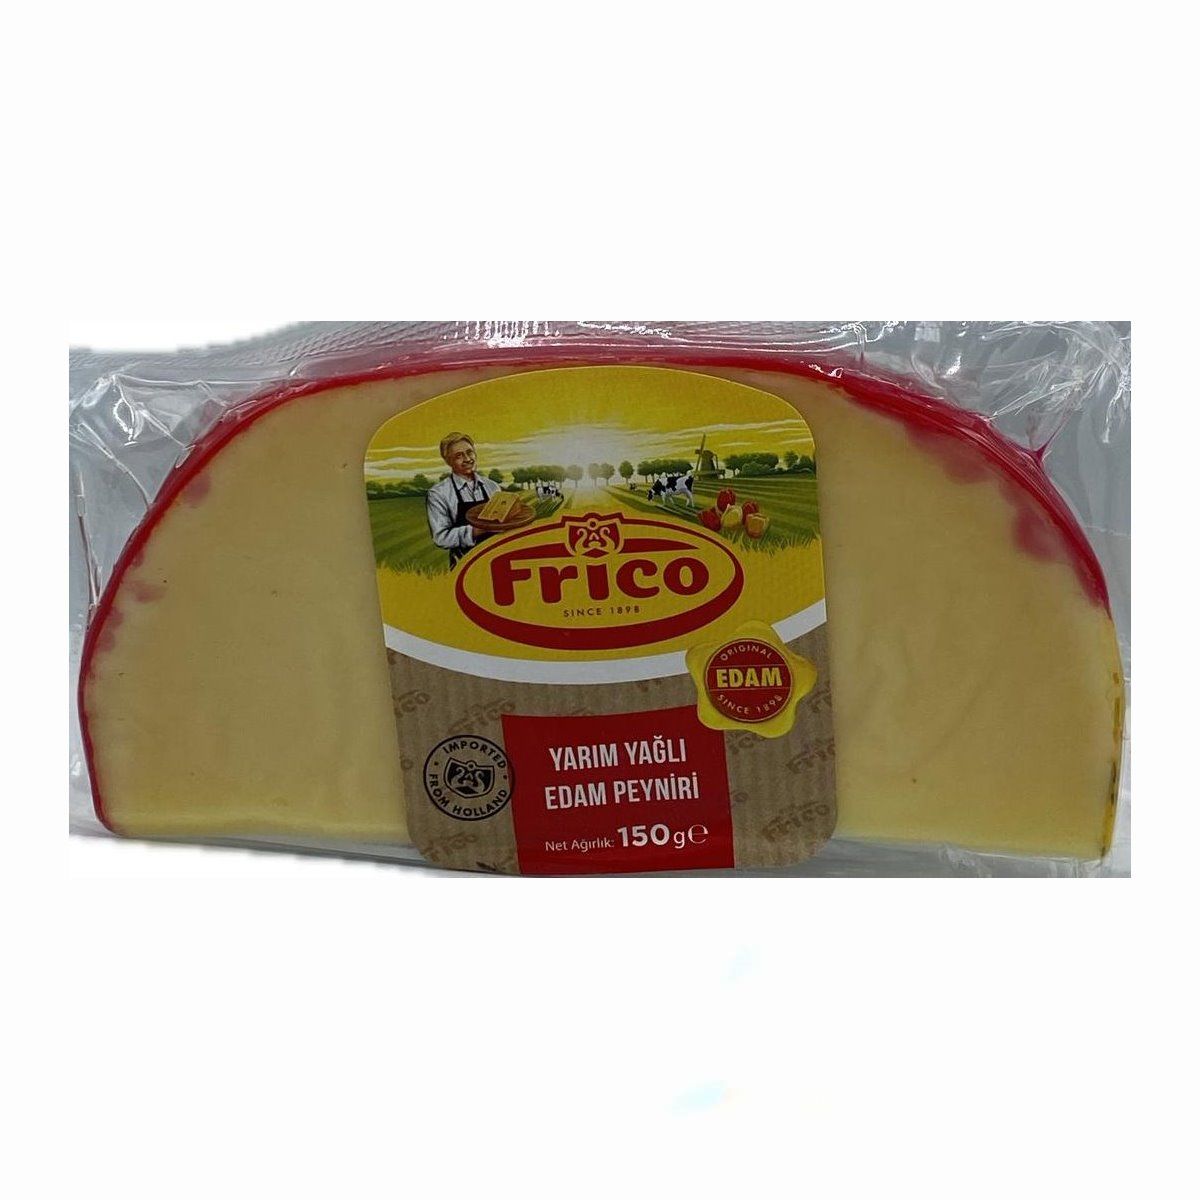 Frico Edam Cheese Edam Peyniri Sade 150 Gr.